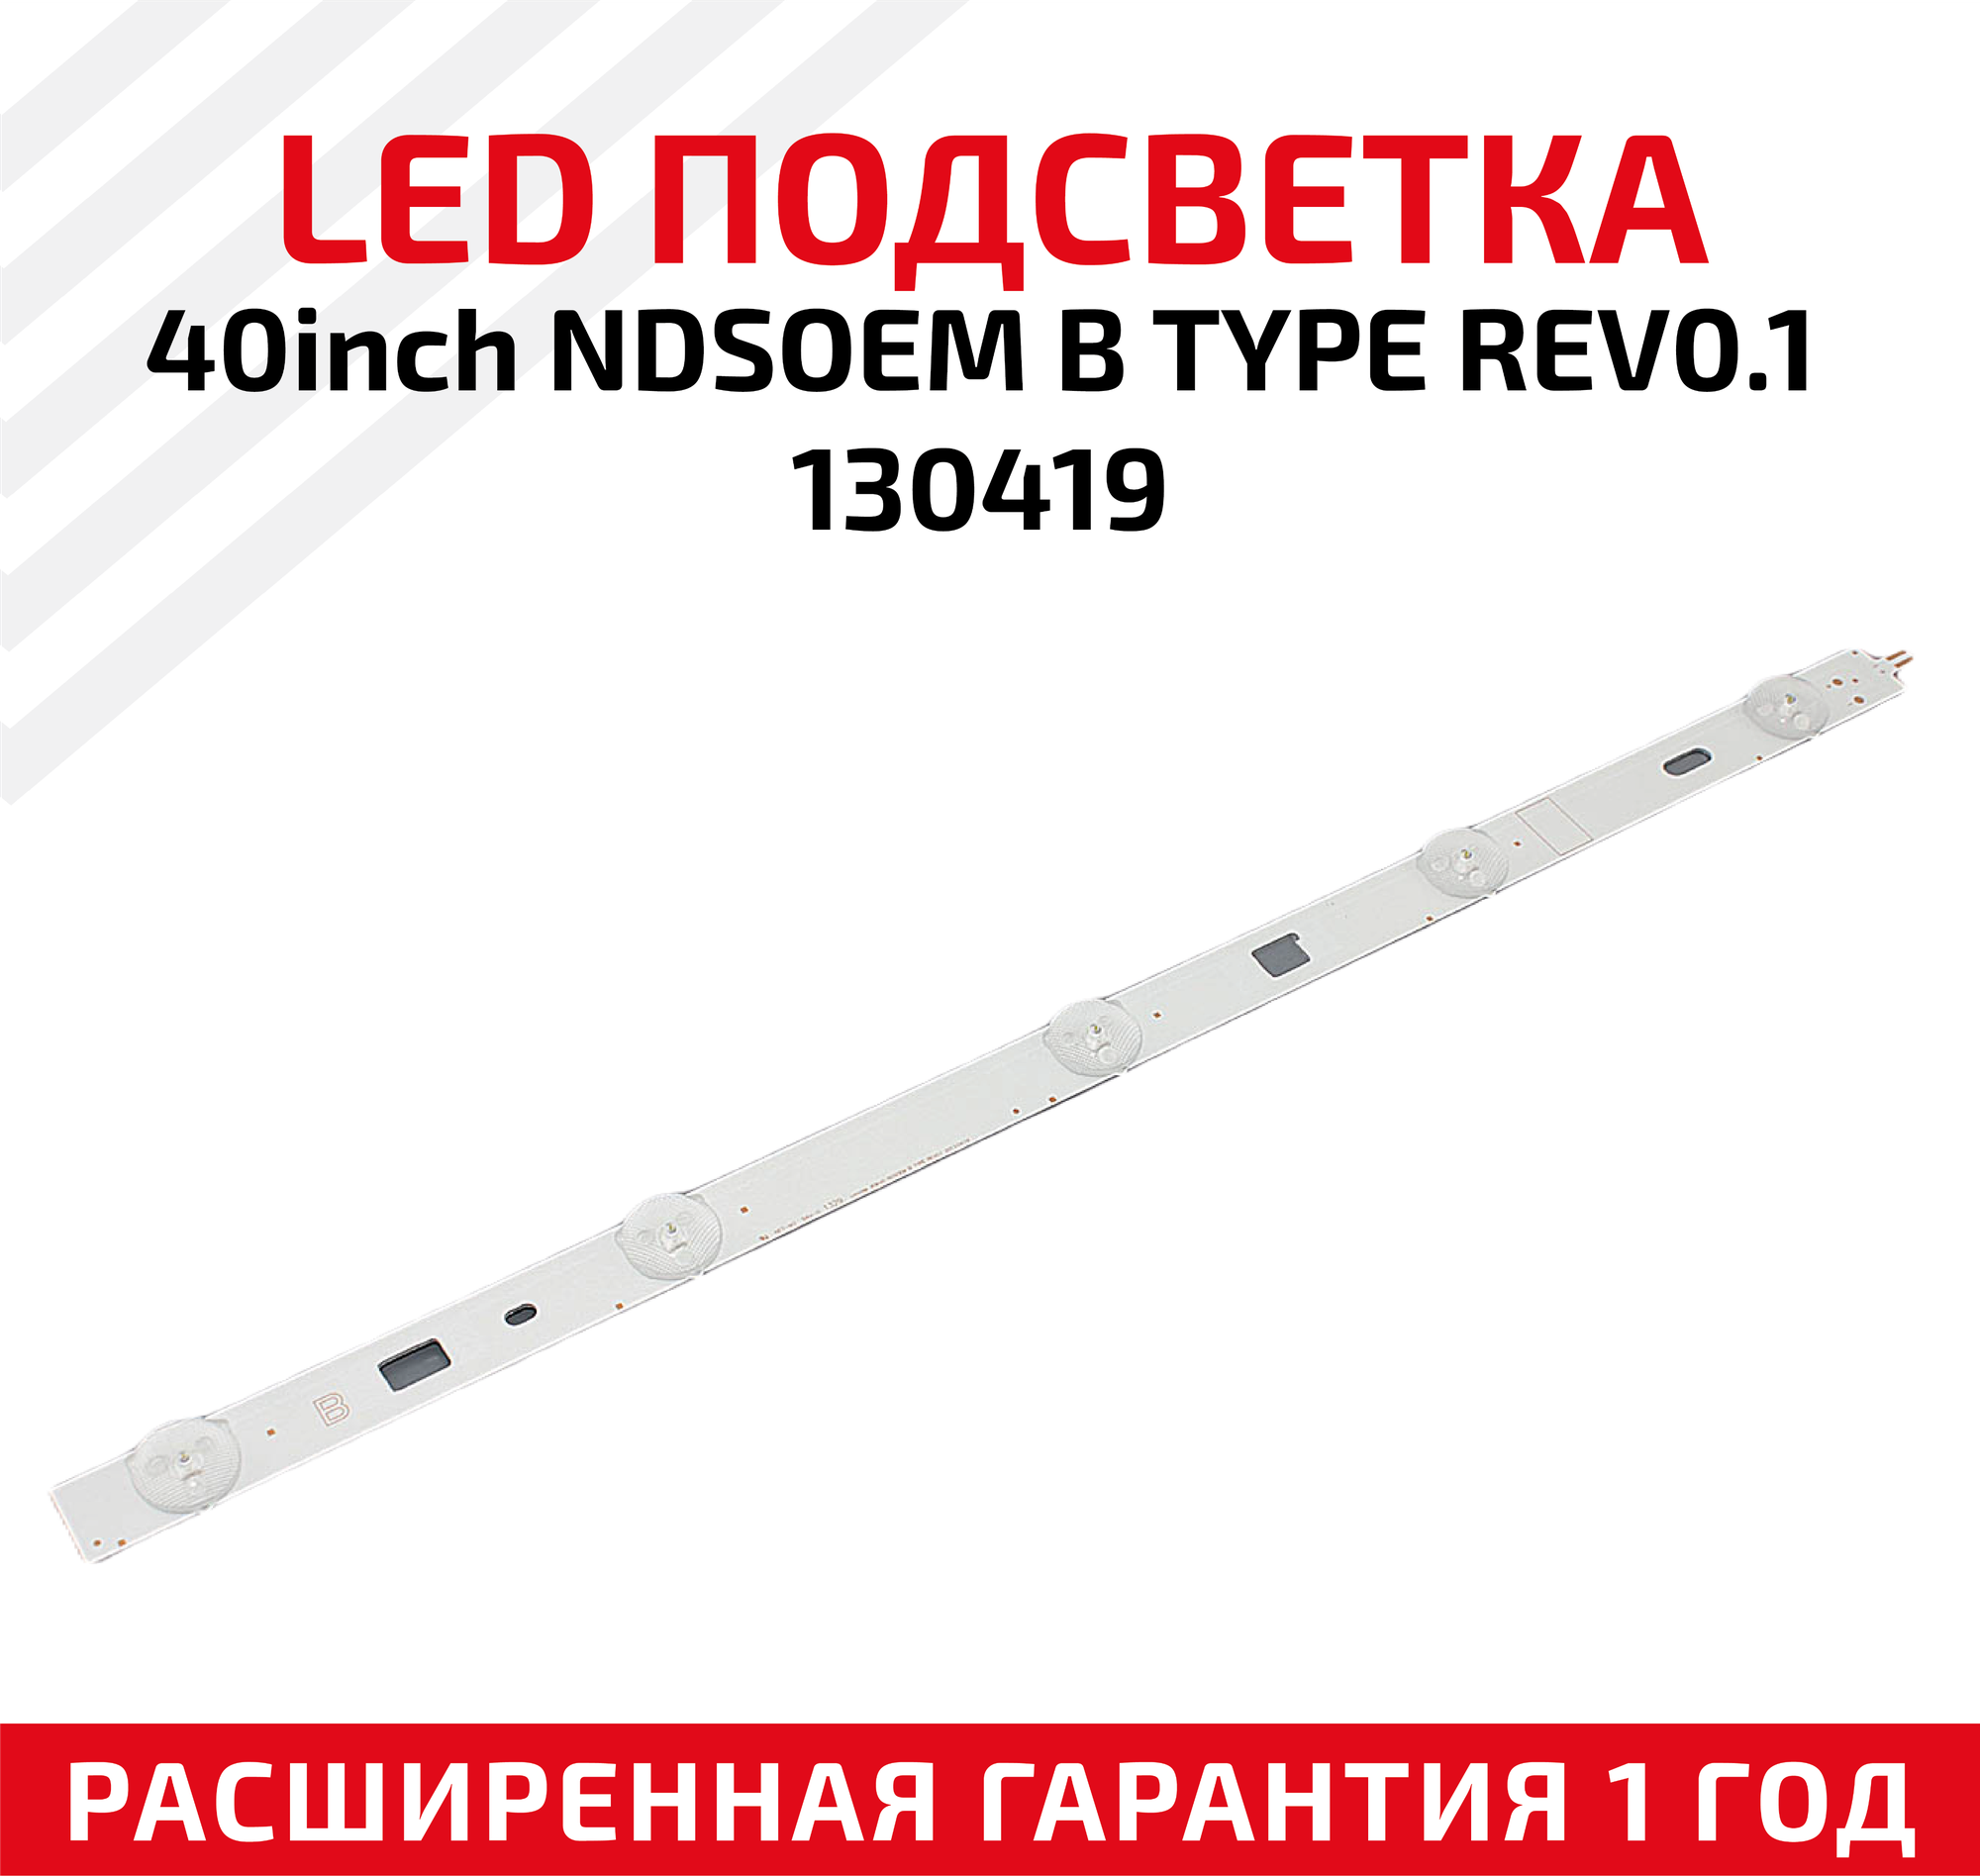 LED подсветка (светодиодная планка) для телевизора 40inch NDSOEM B TYPE REV0.1 130419